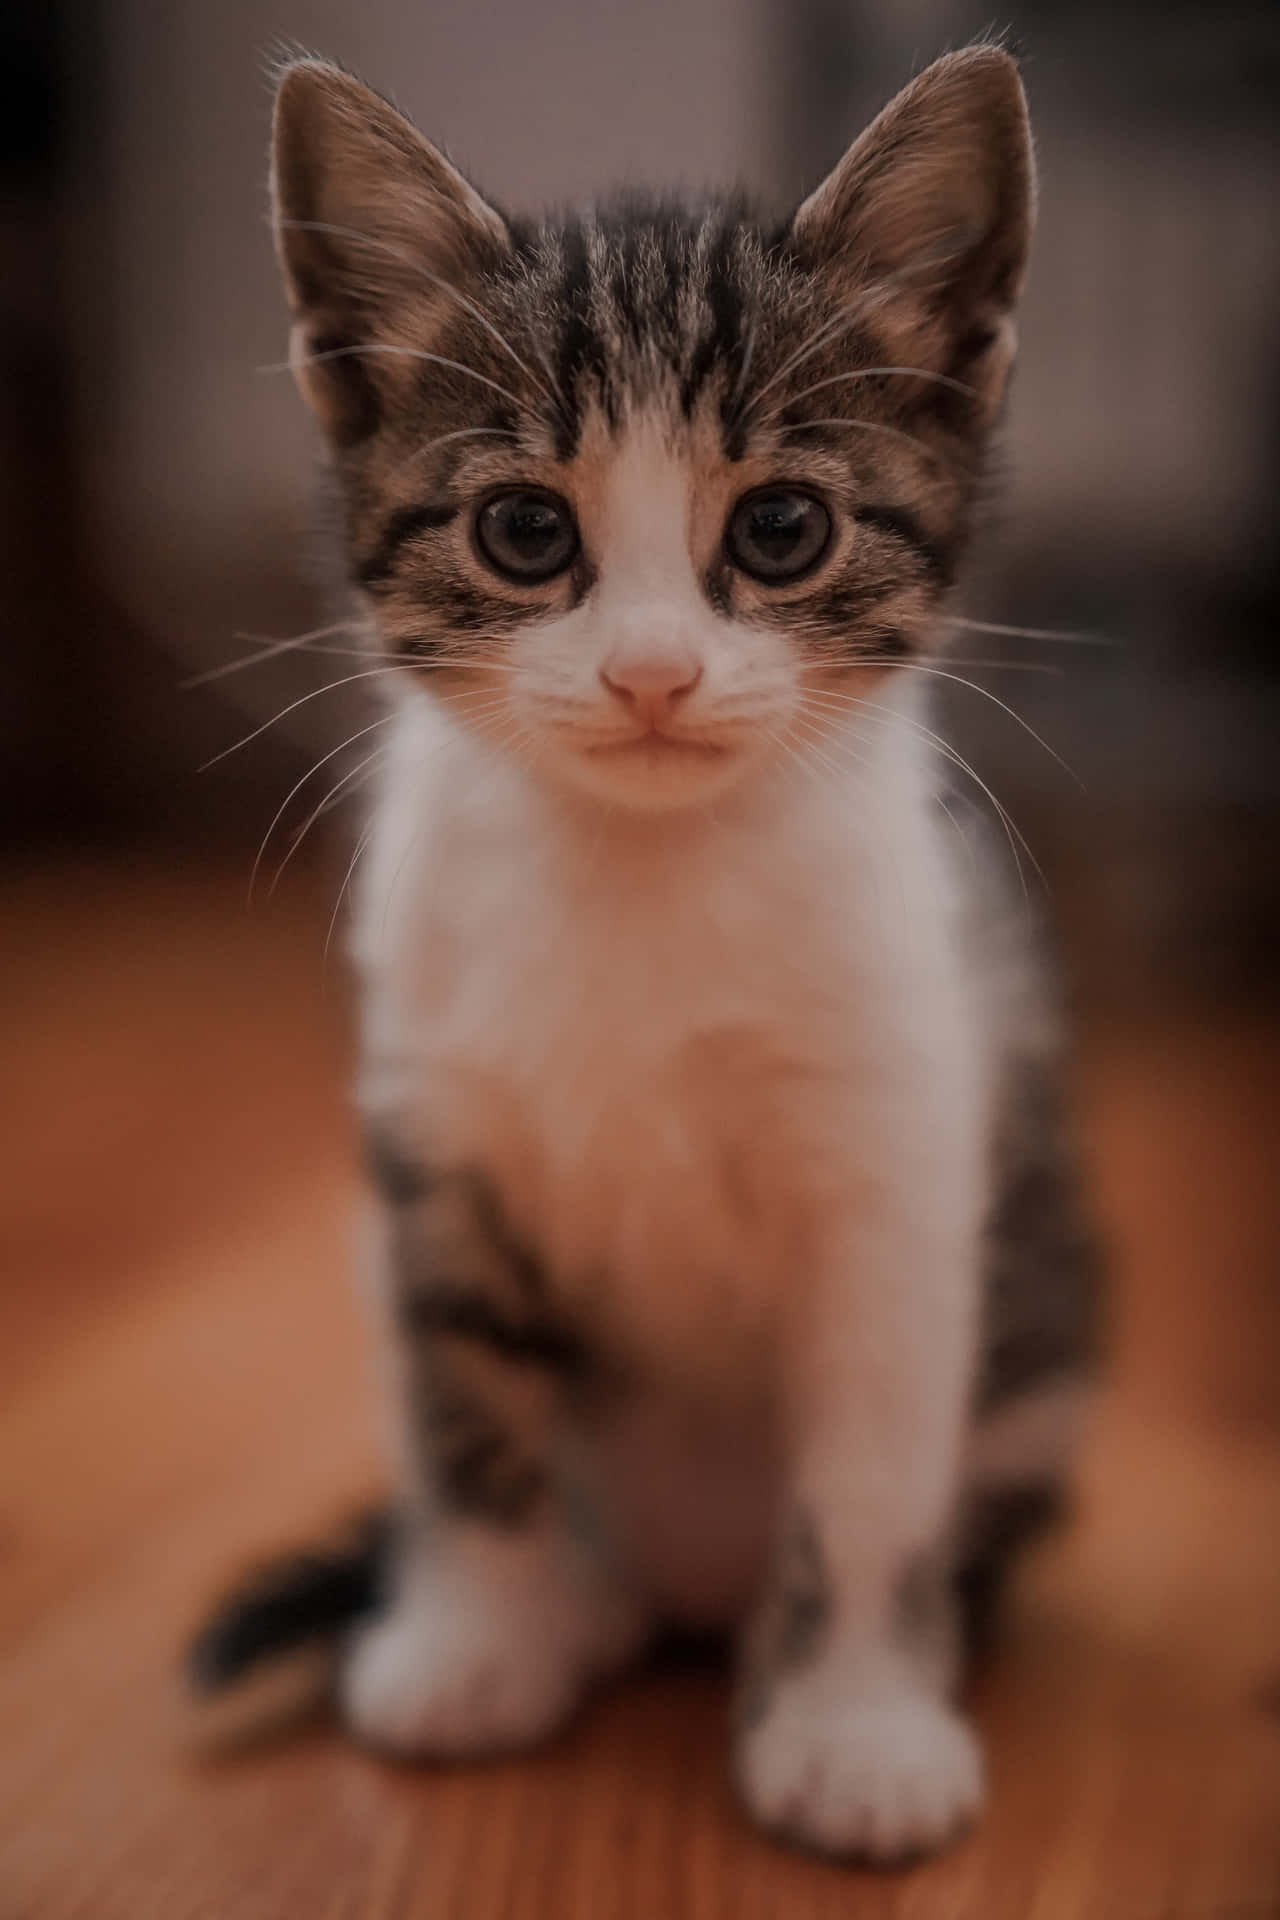 "The Cutest Kitty Around!"